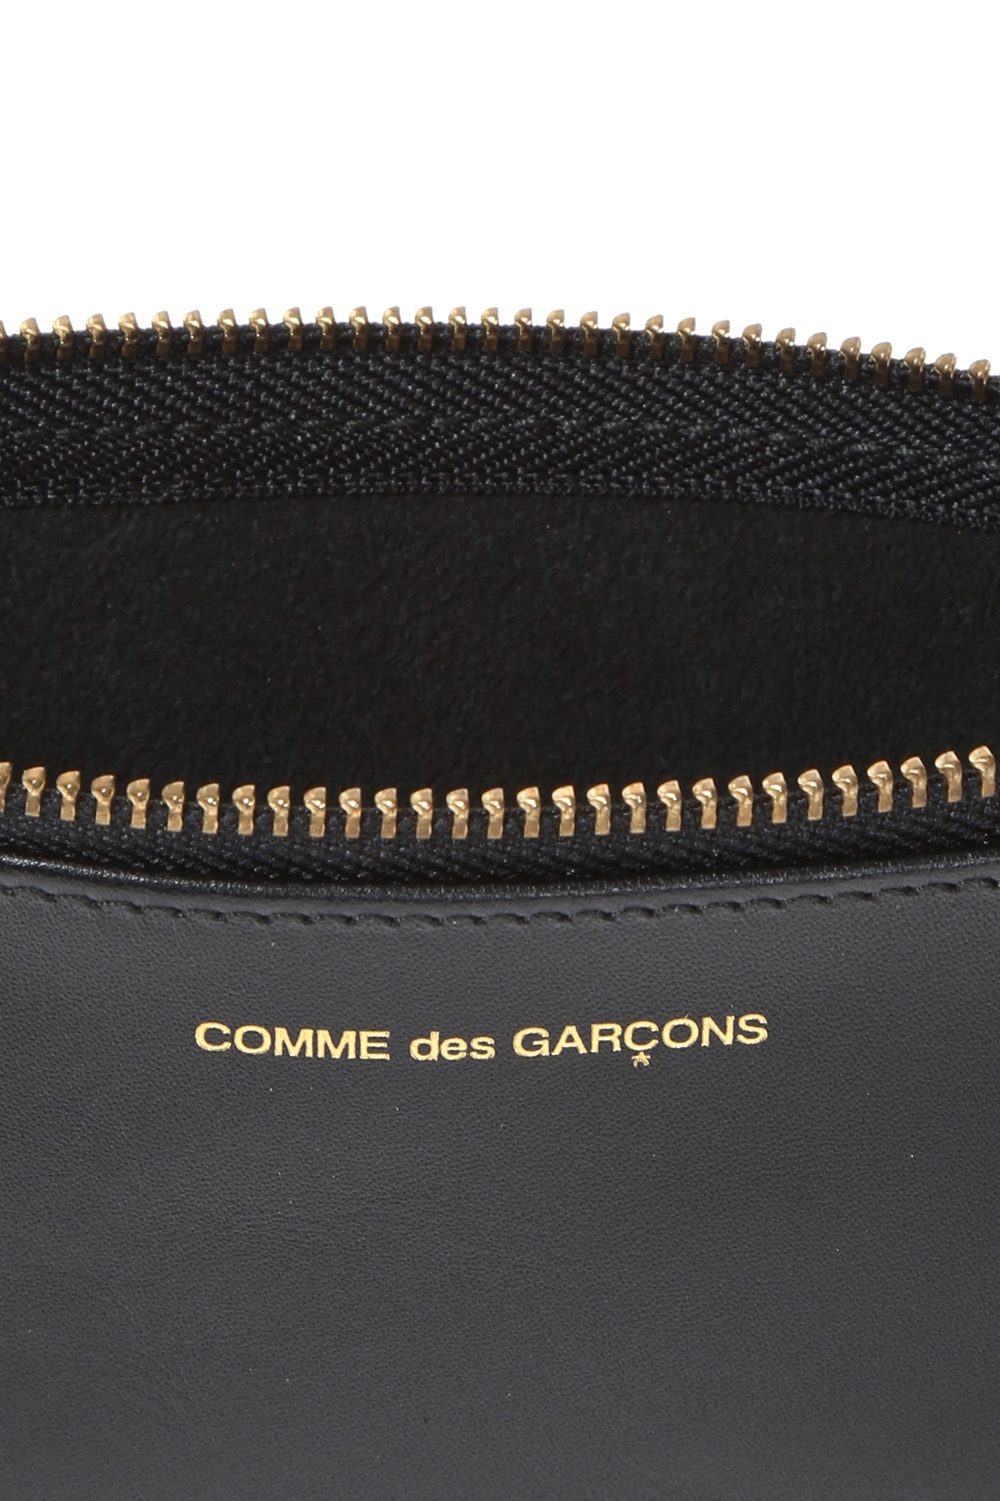 Comme des Garçons Embossed logo leather pouch